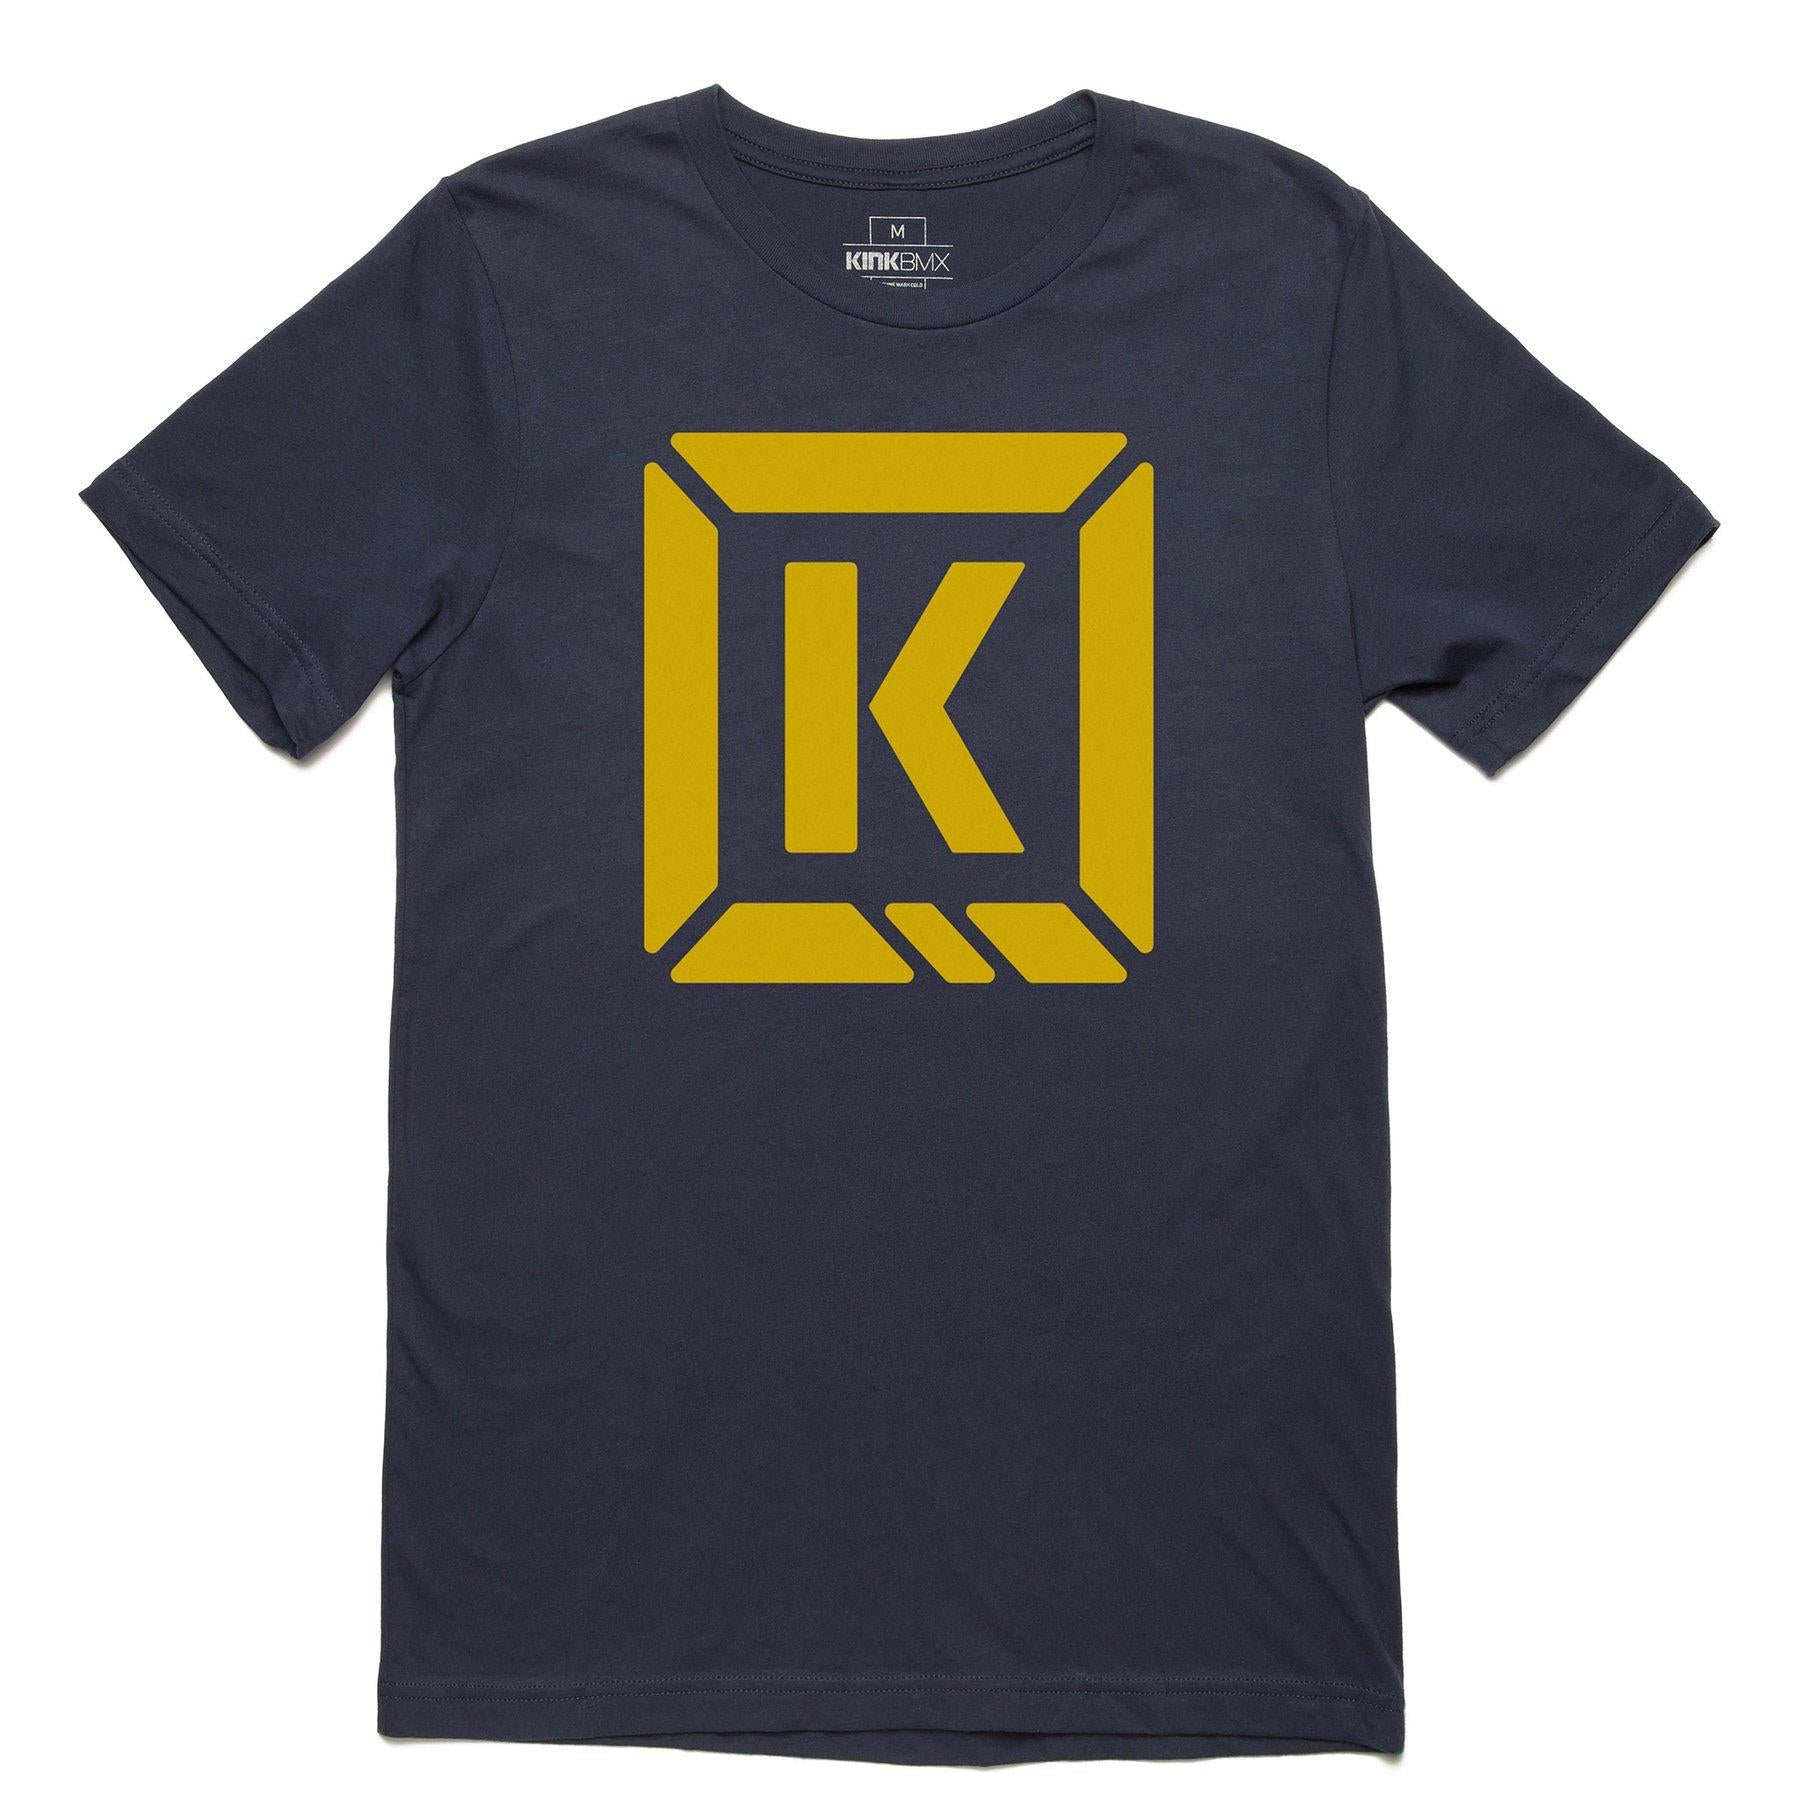 Kink Represent T-Shirt - Navy/Gold Small